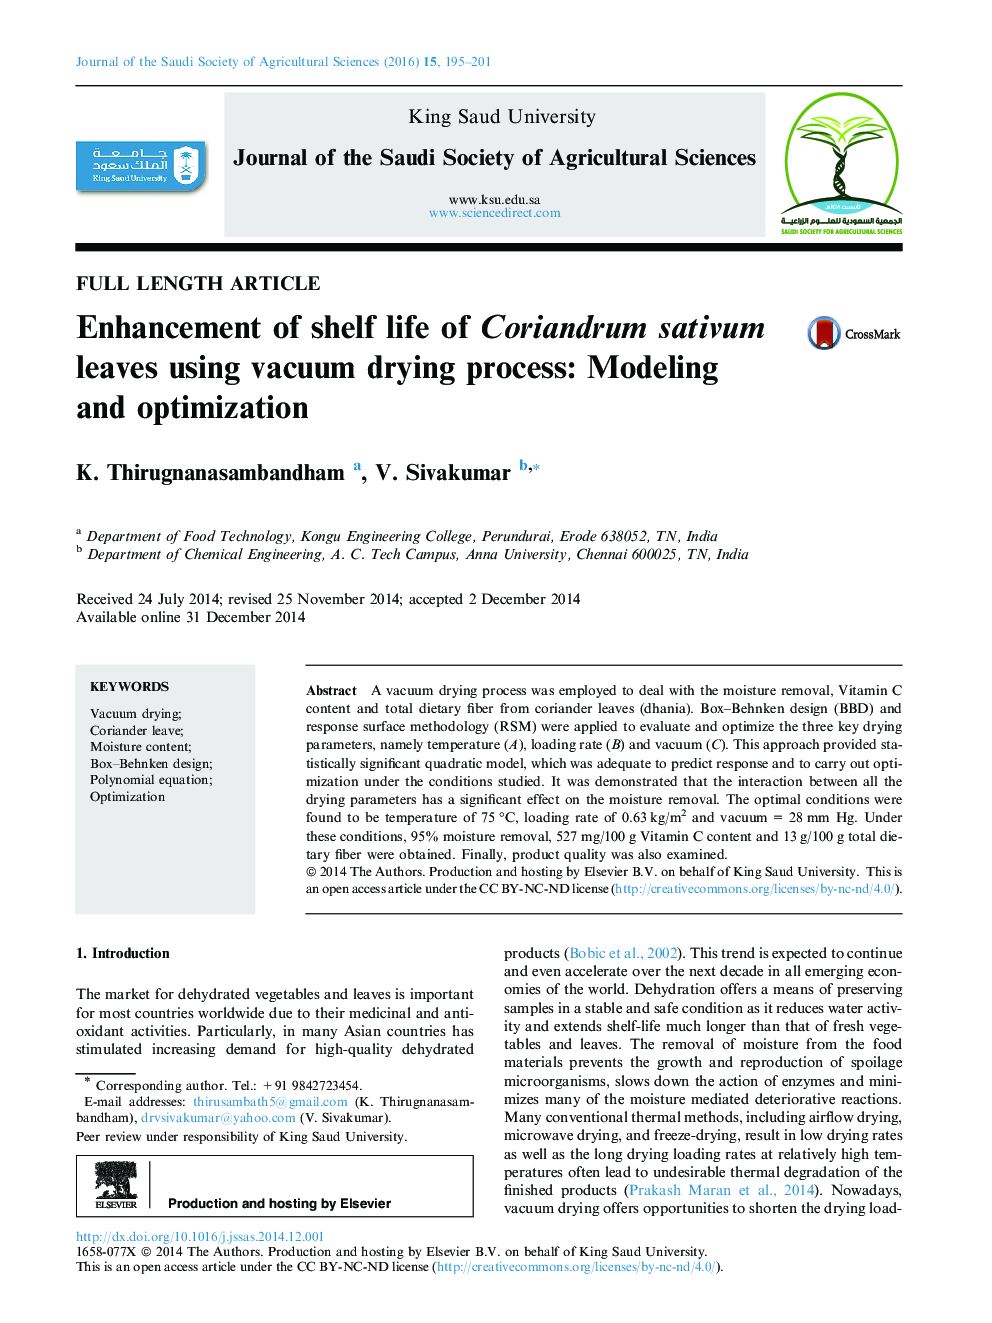 Enhancement of shelf life of Coriandrum sativum leaves using vacuum drying process: Modeling and optimization 